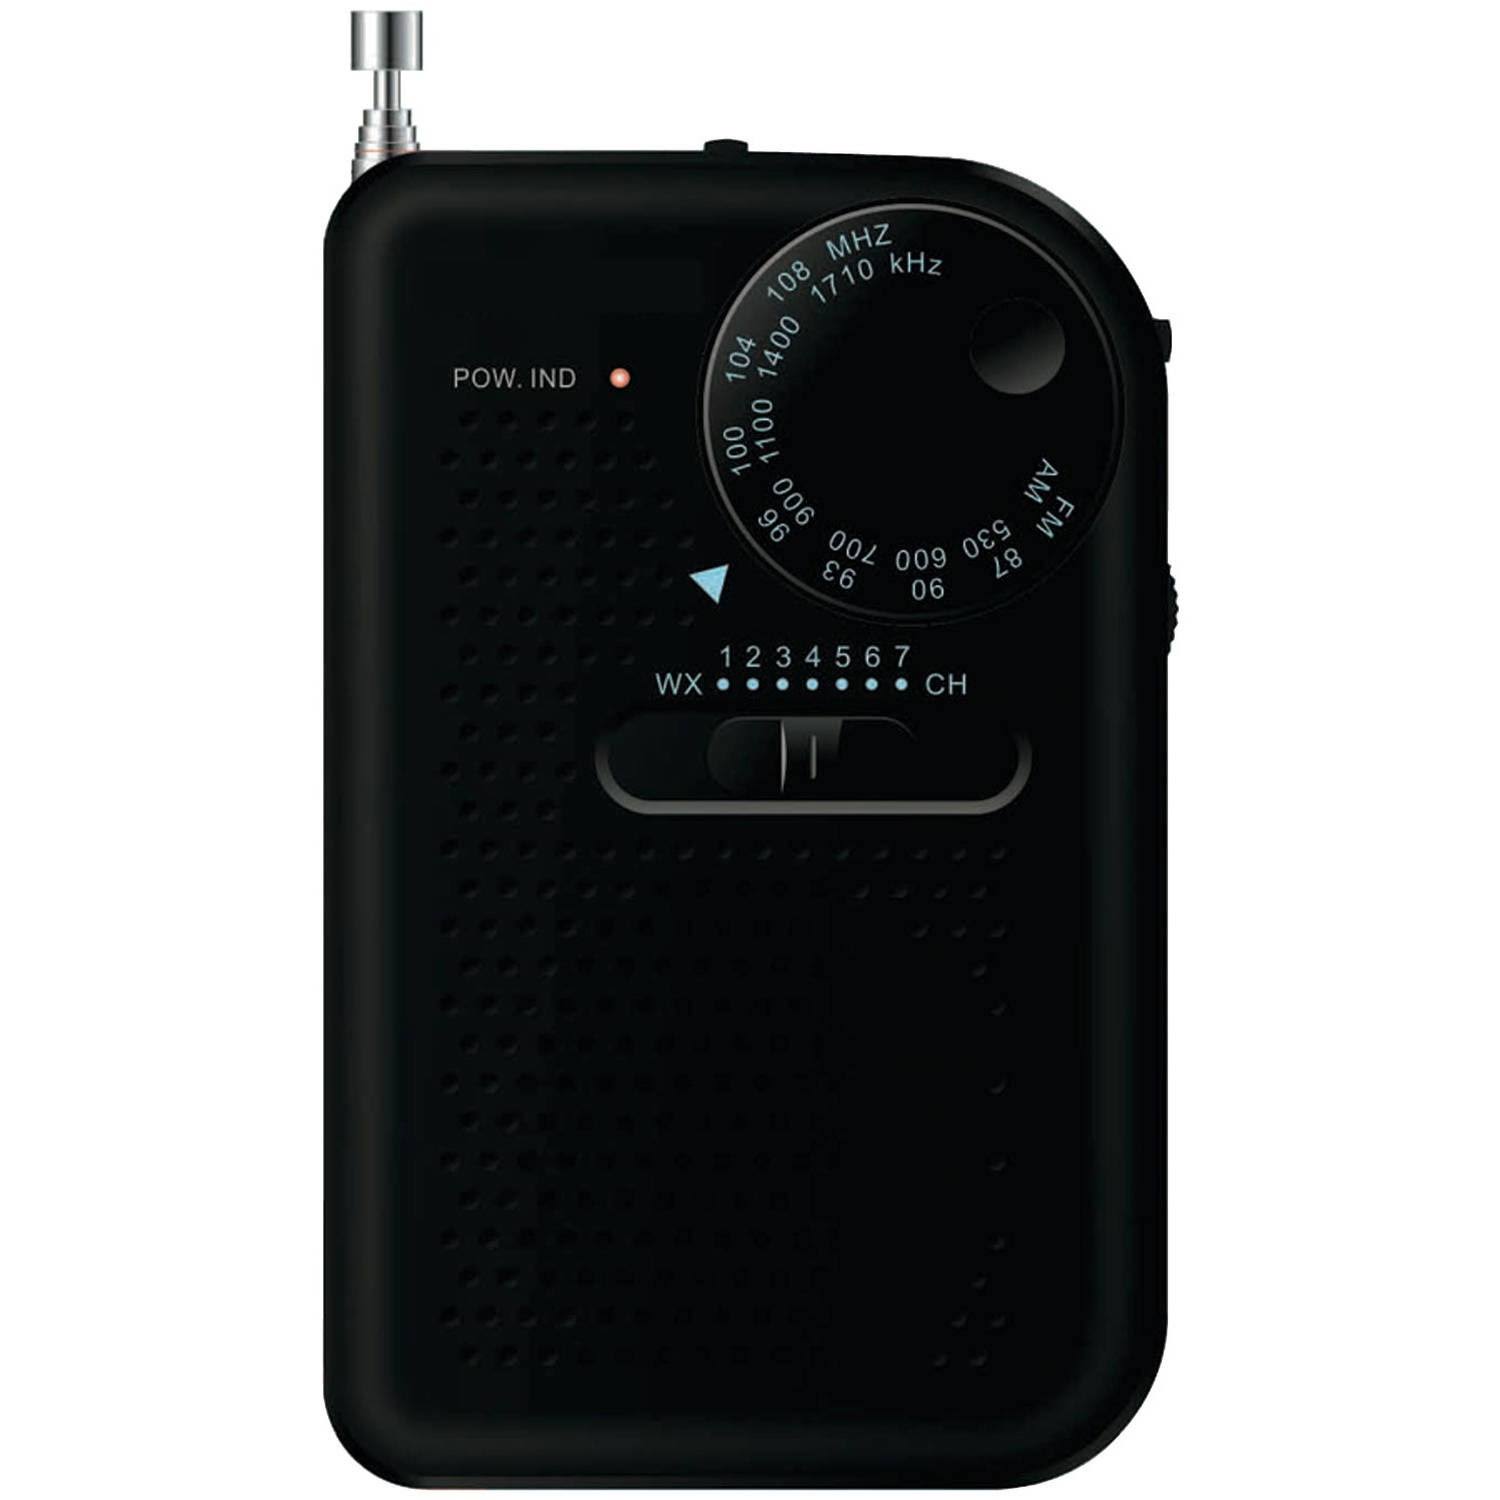 Sylvania Mr4240 Portable Am/Fm Pocket Radio - Black